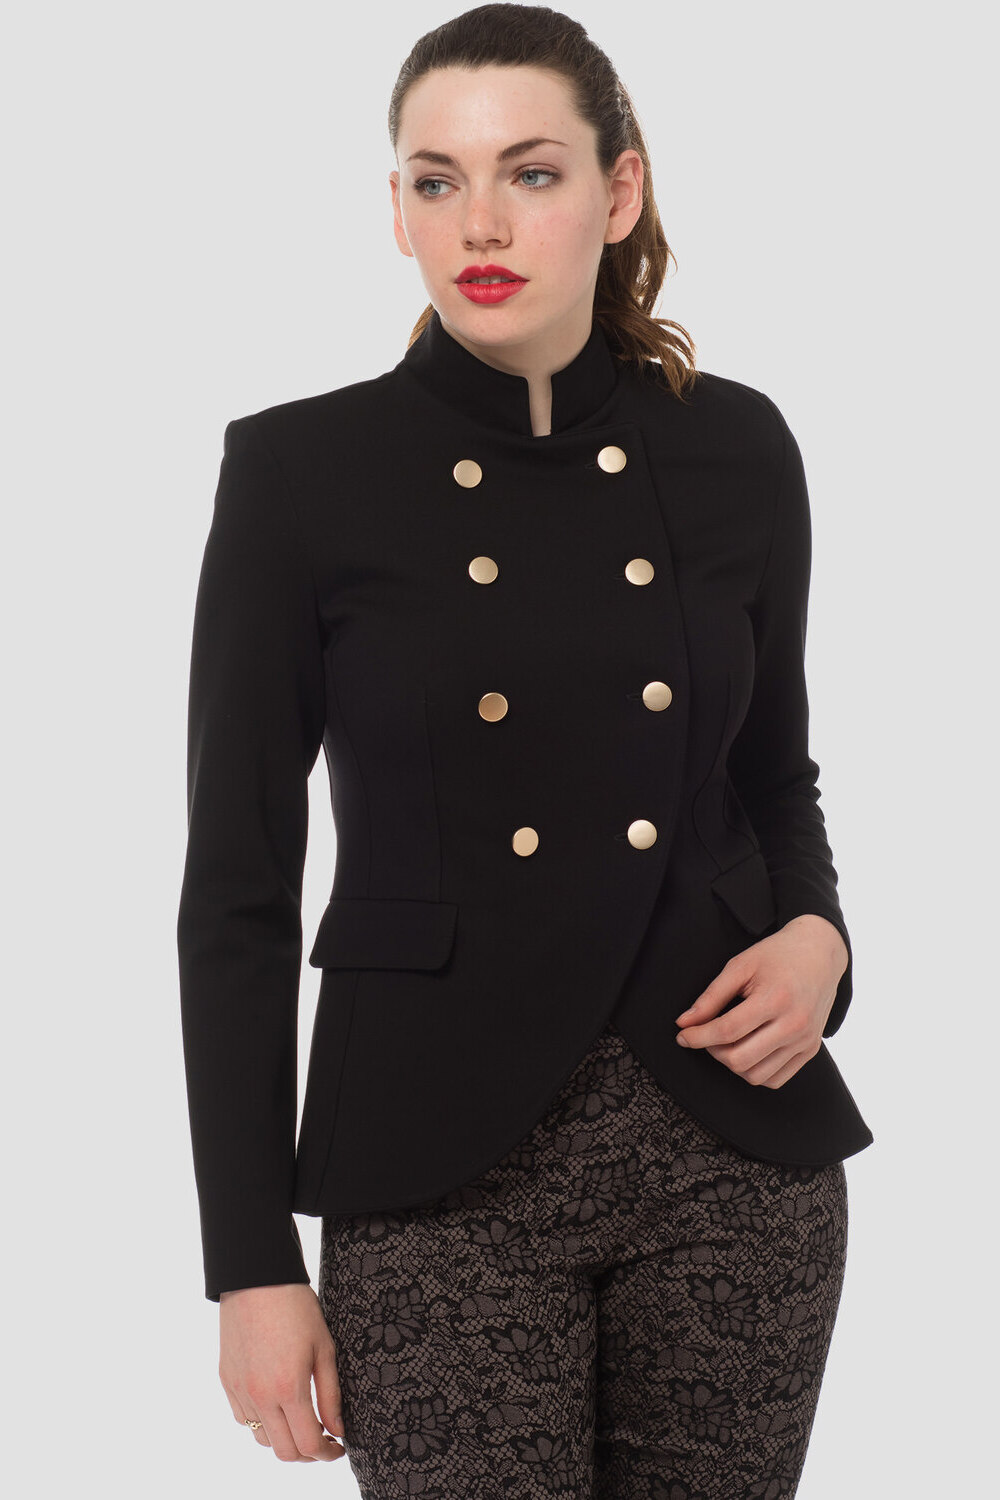 Joseph Ribkoff jacket style 183352. Black